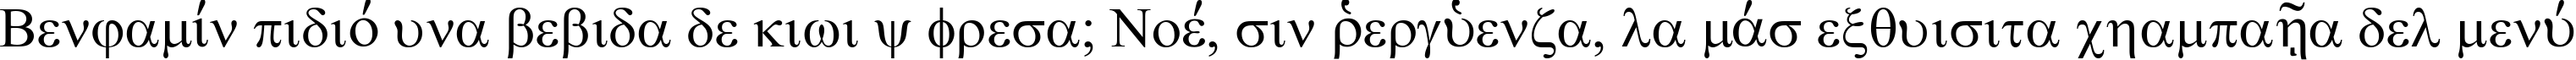 Пример написания шрифтом Symbol Accentuated текста на испанском